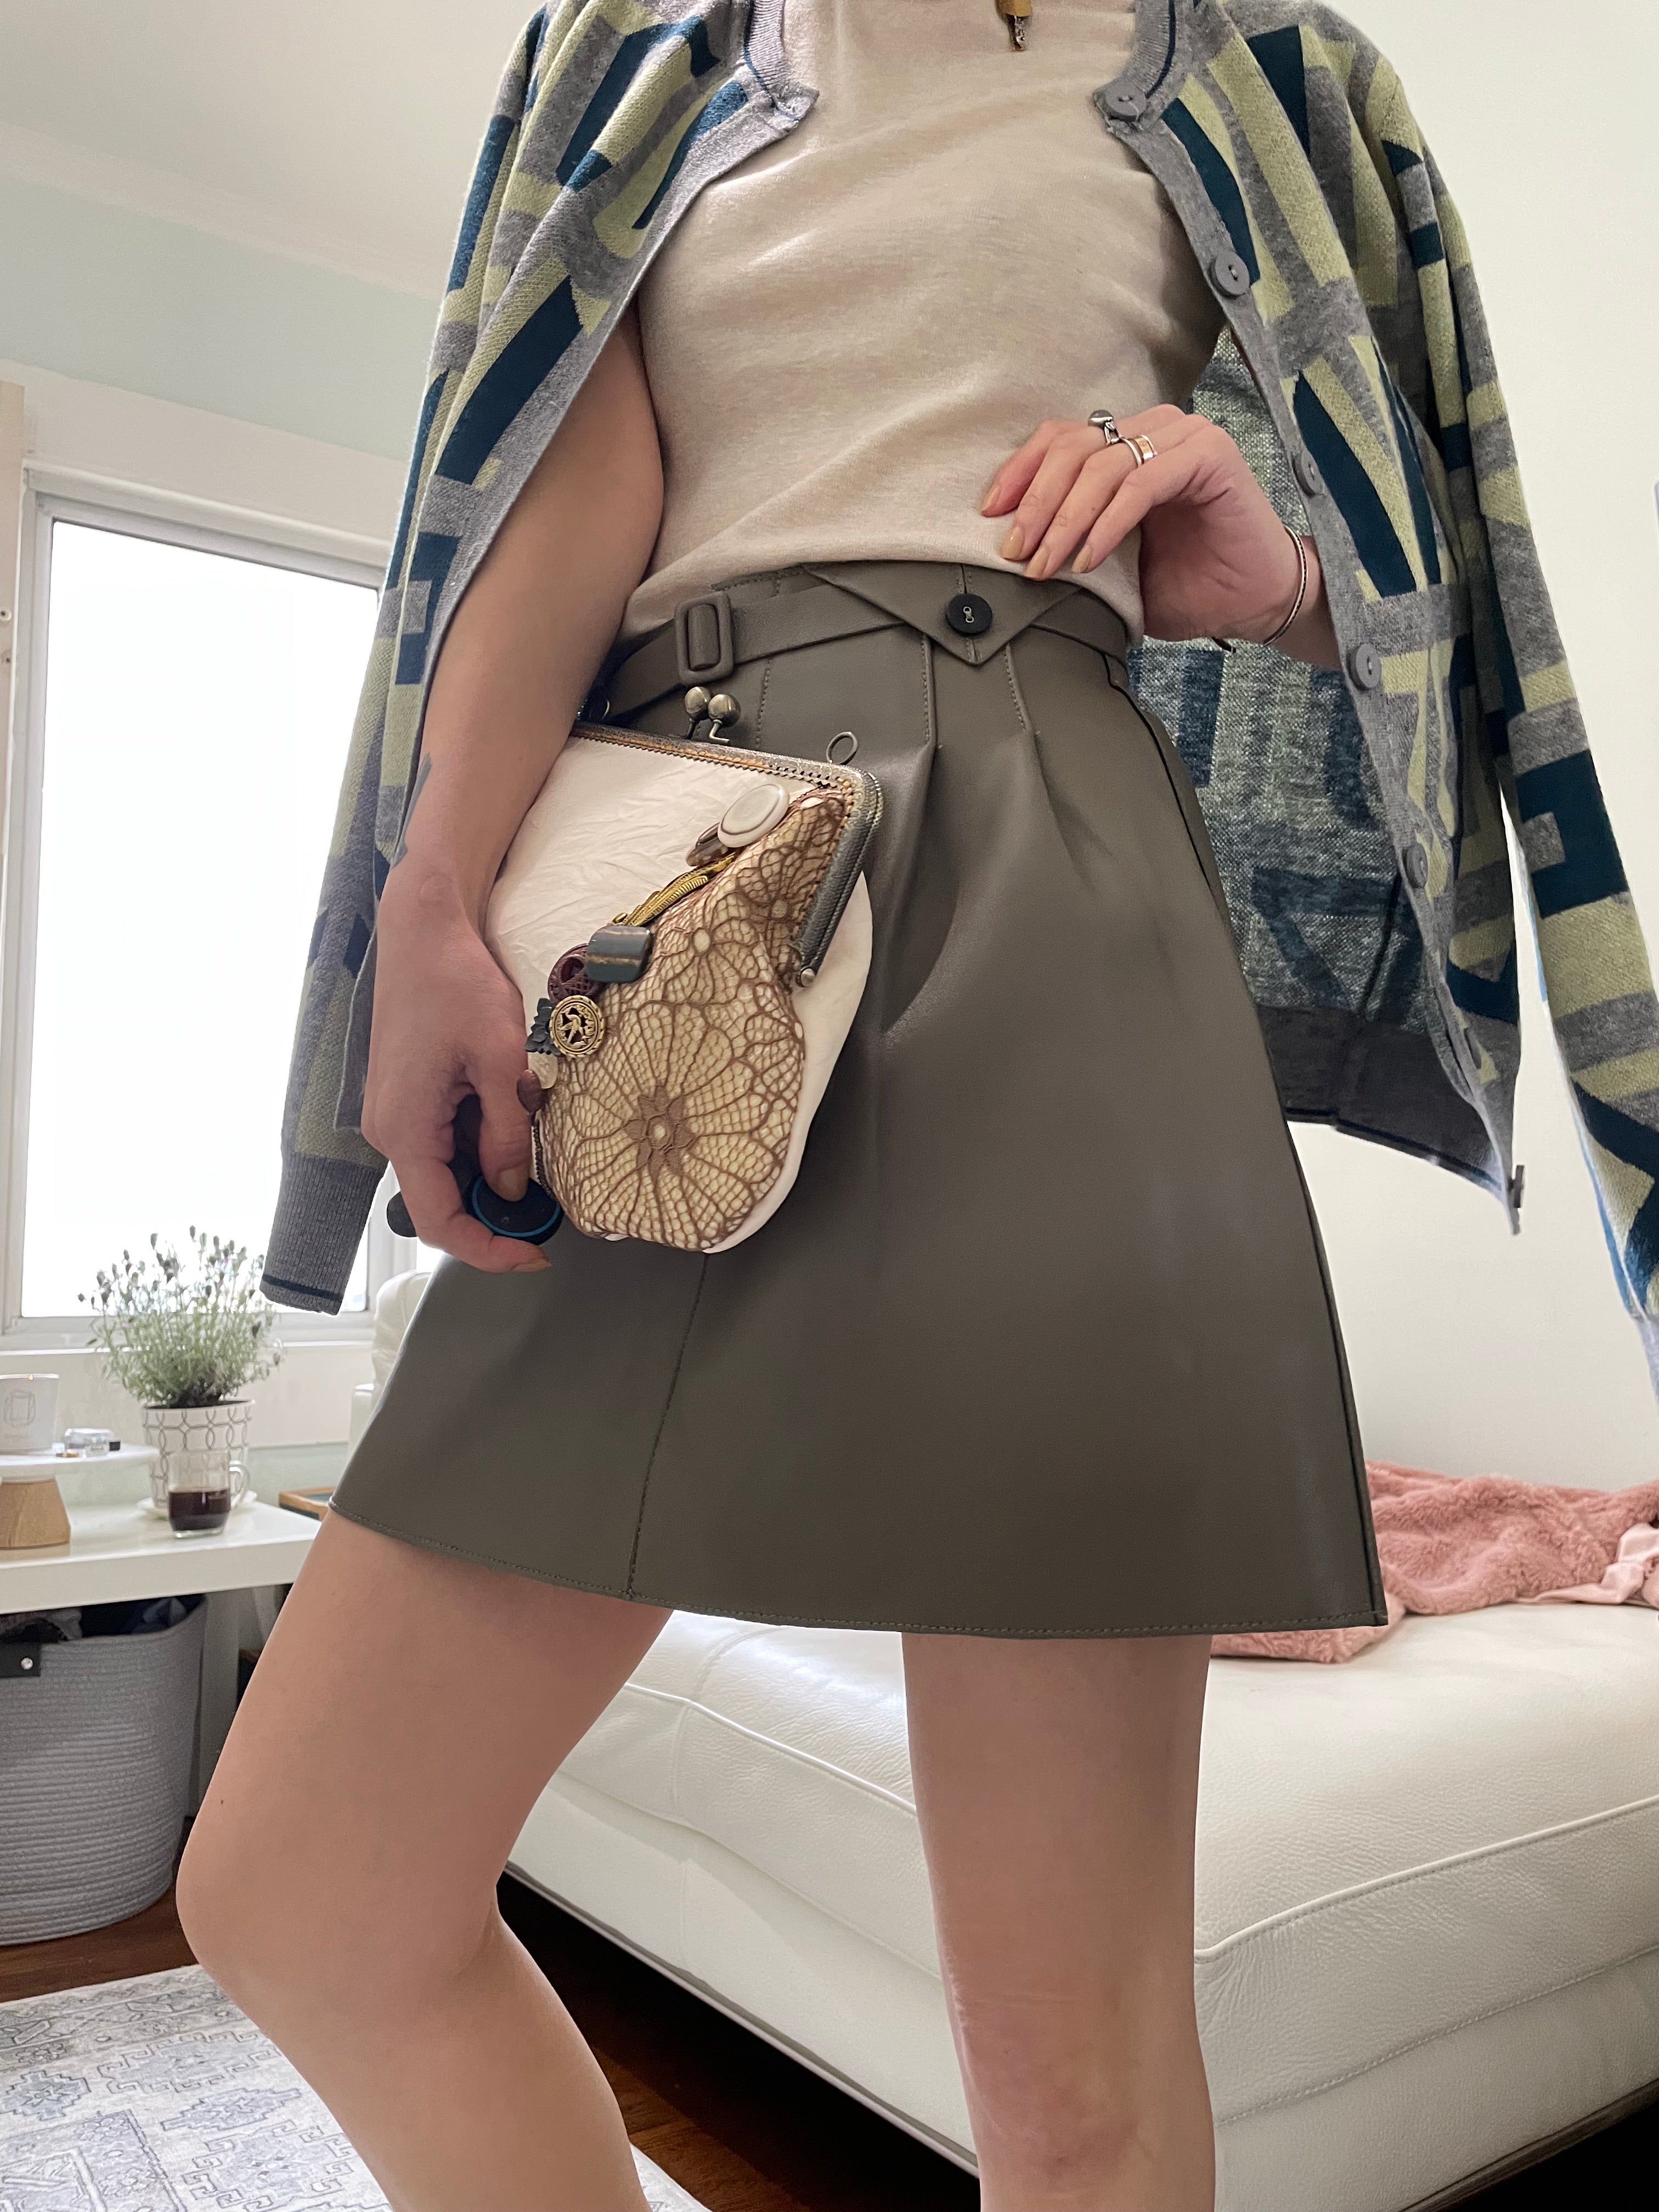 Genuine Leather Olive grey Bubble Skirt 1180HKD